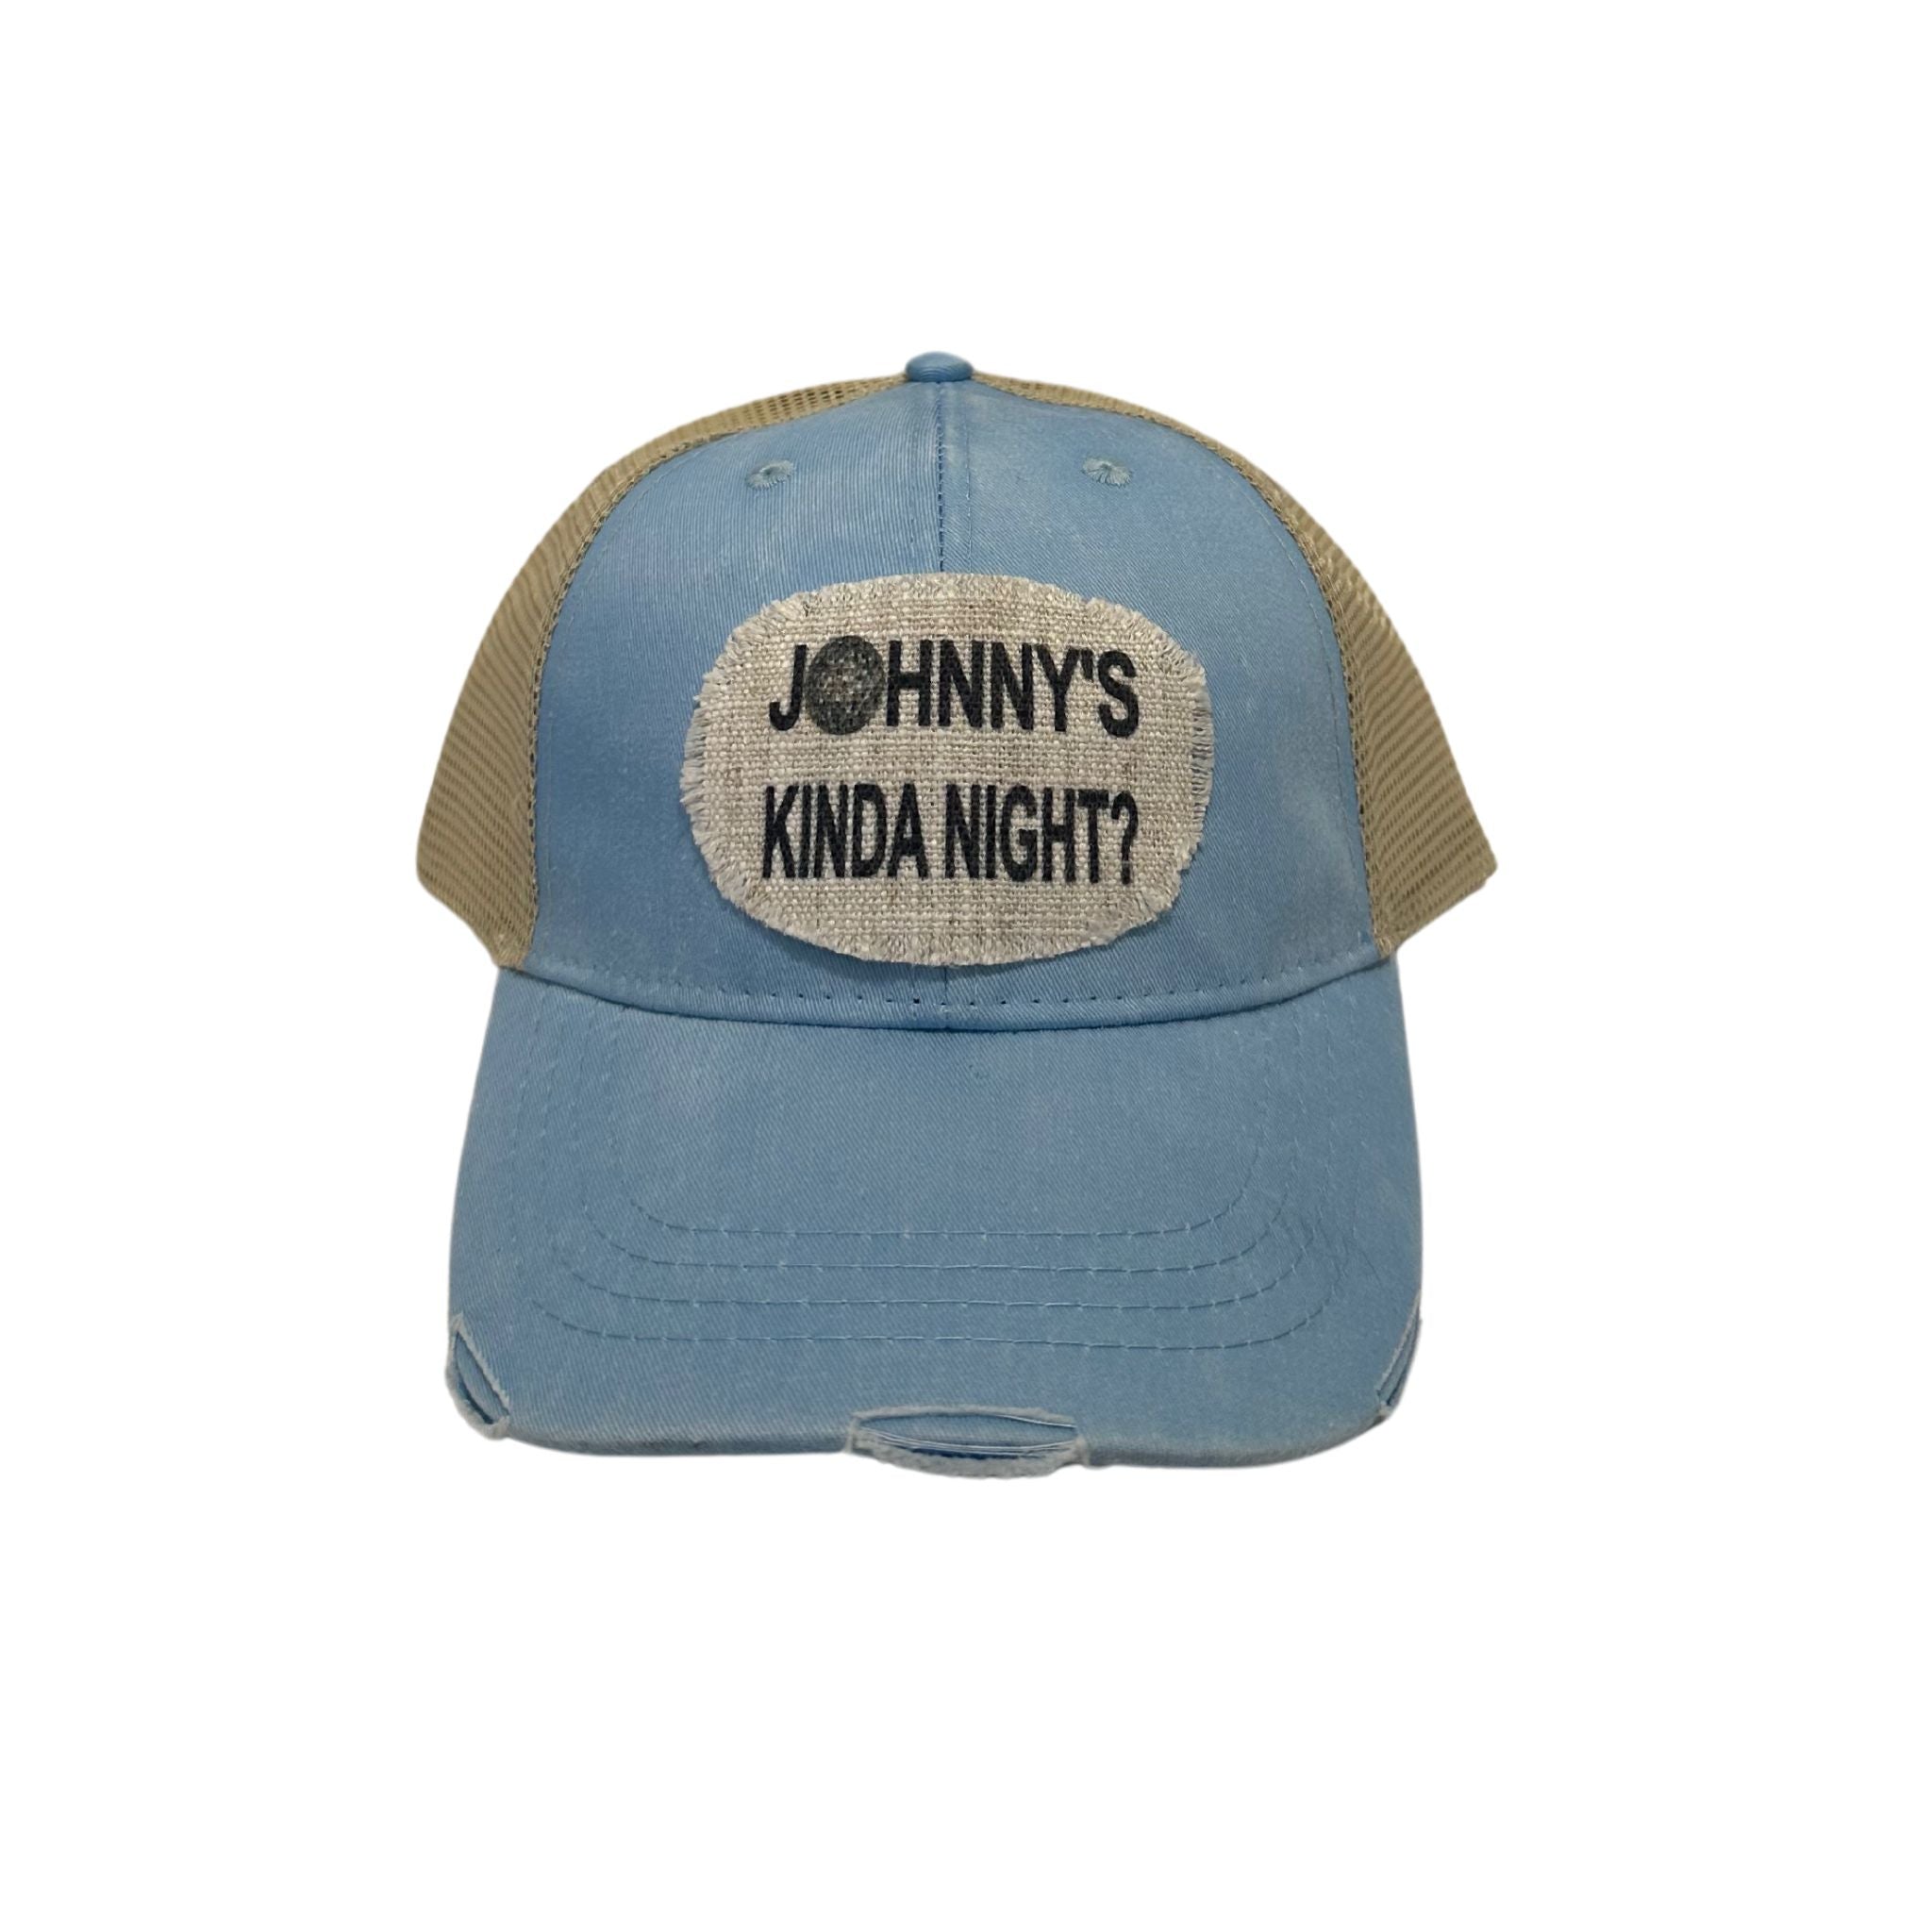 Johnny's Kinda Night?